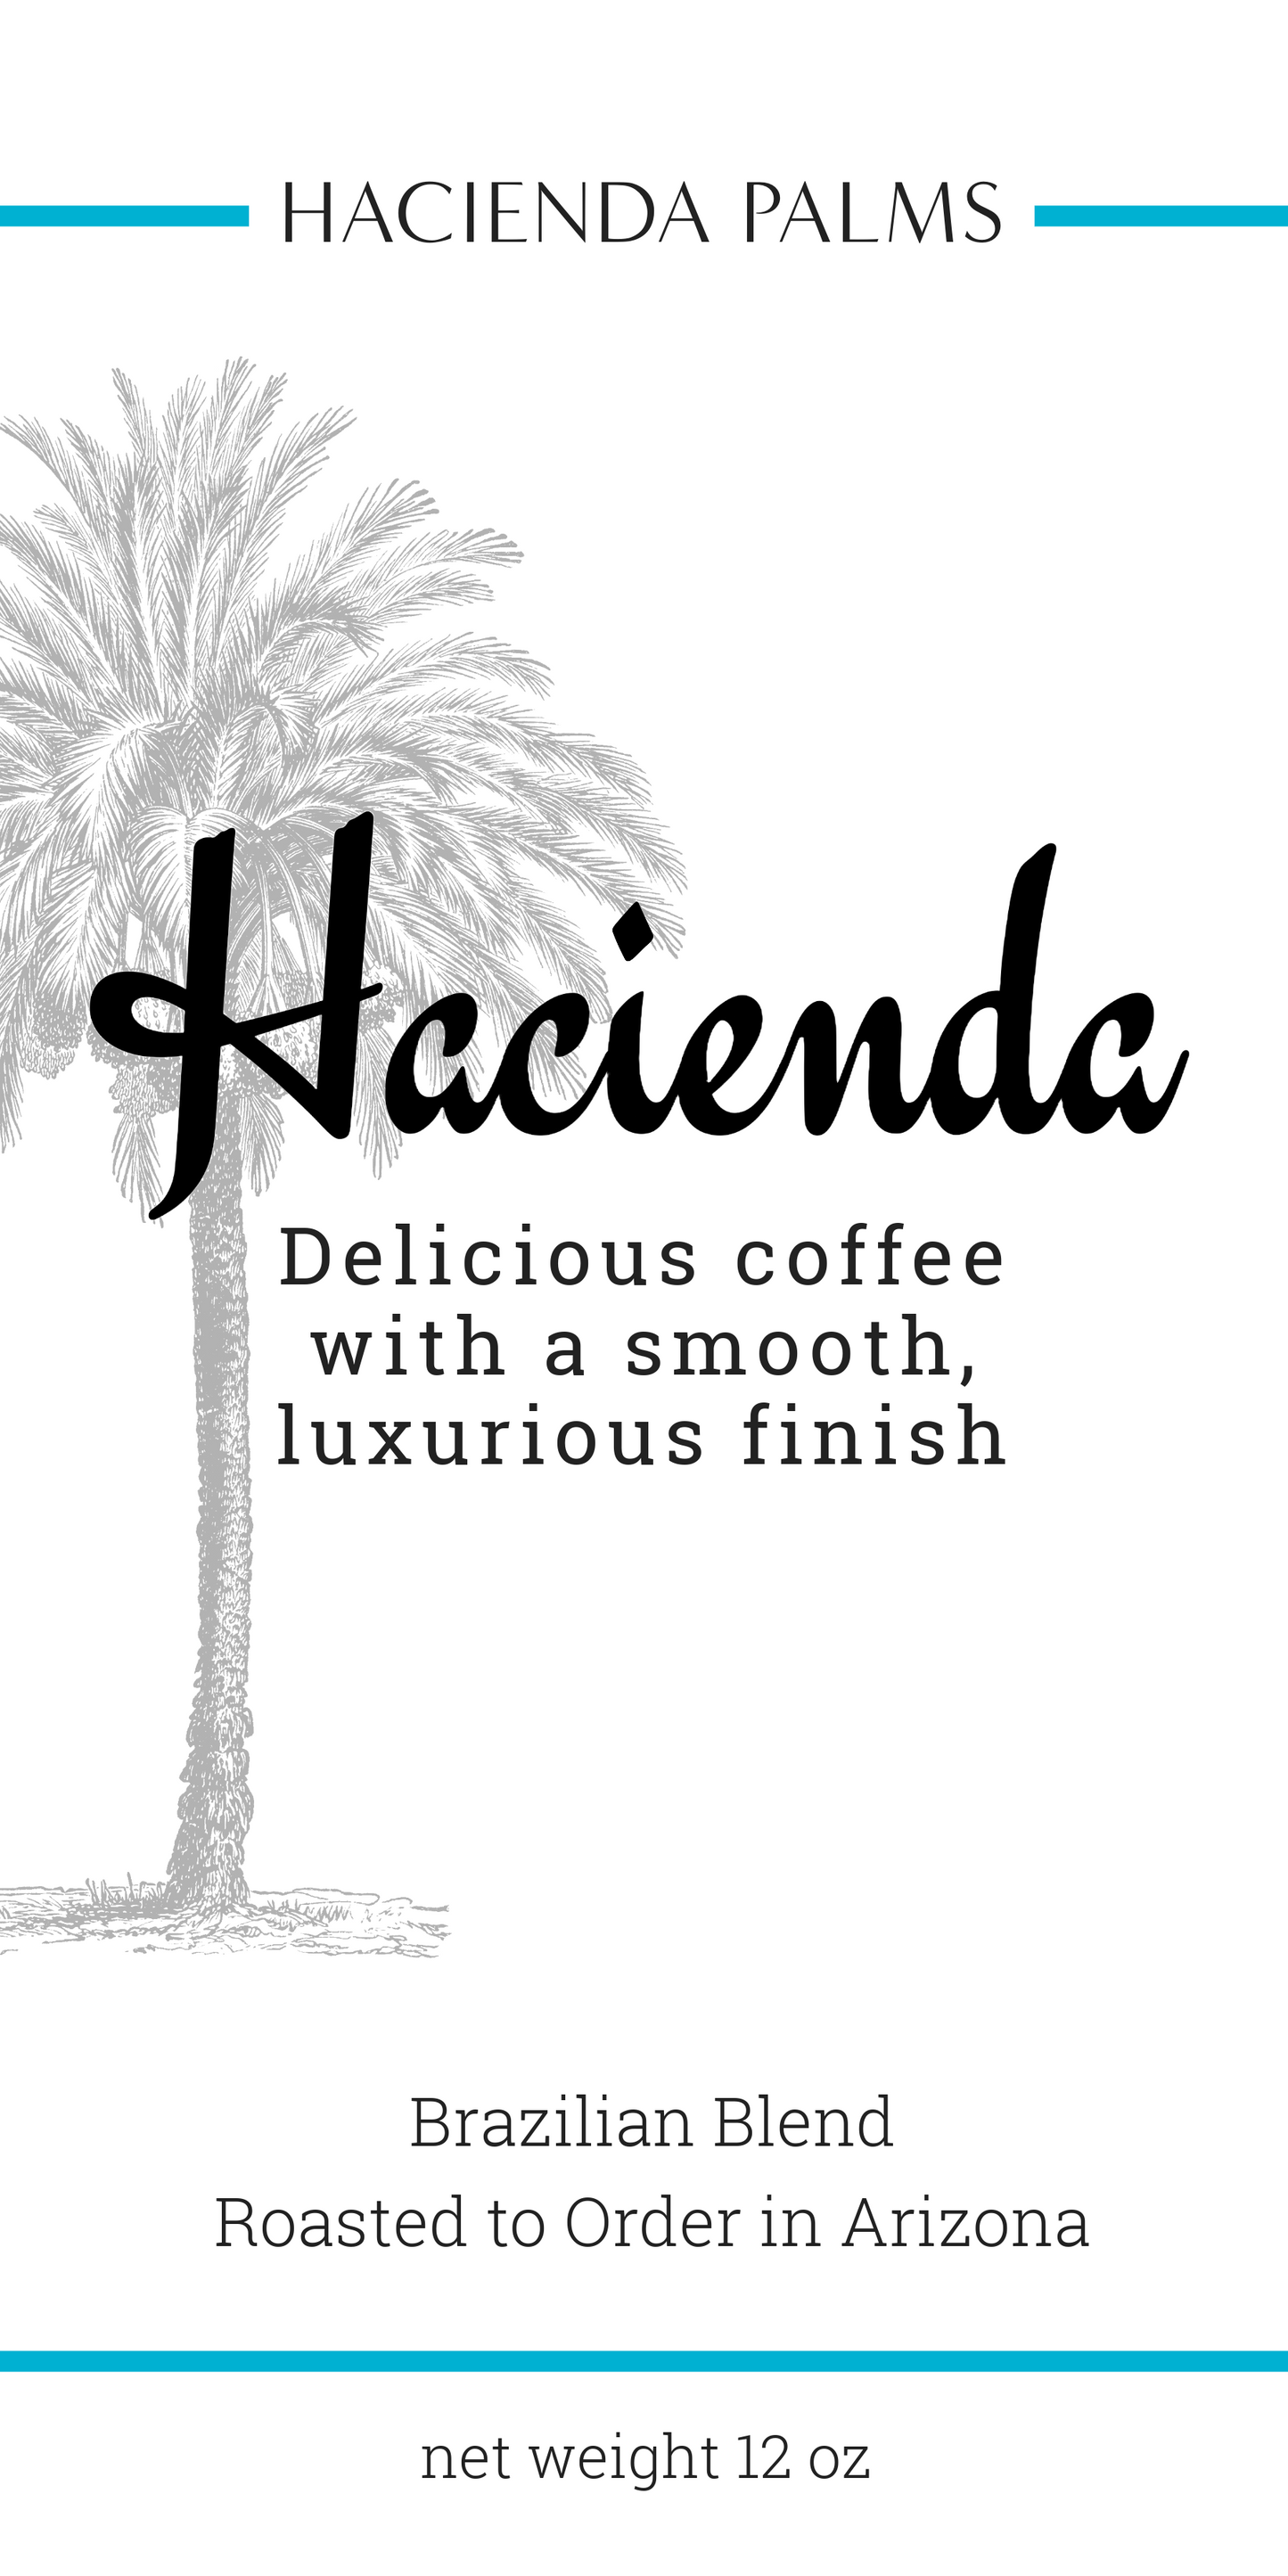 Hacienda Coffee